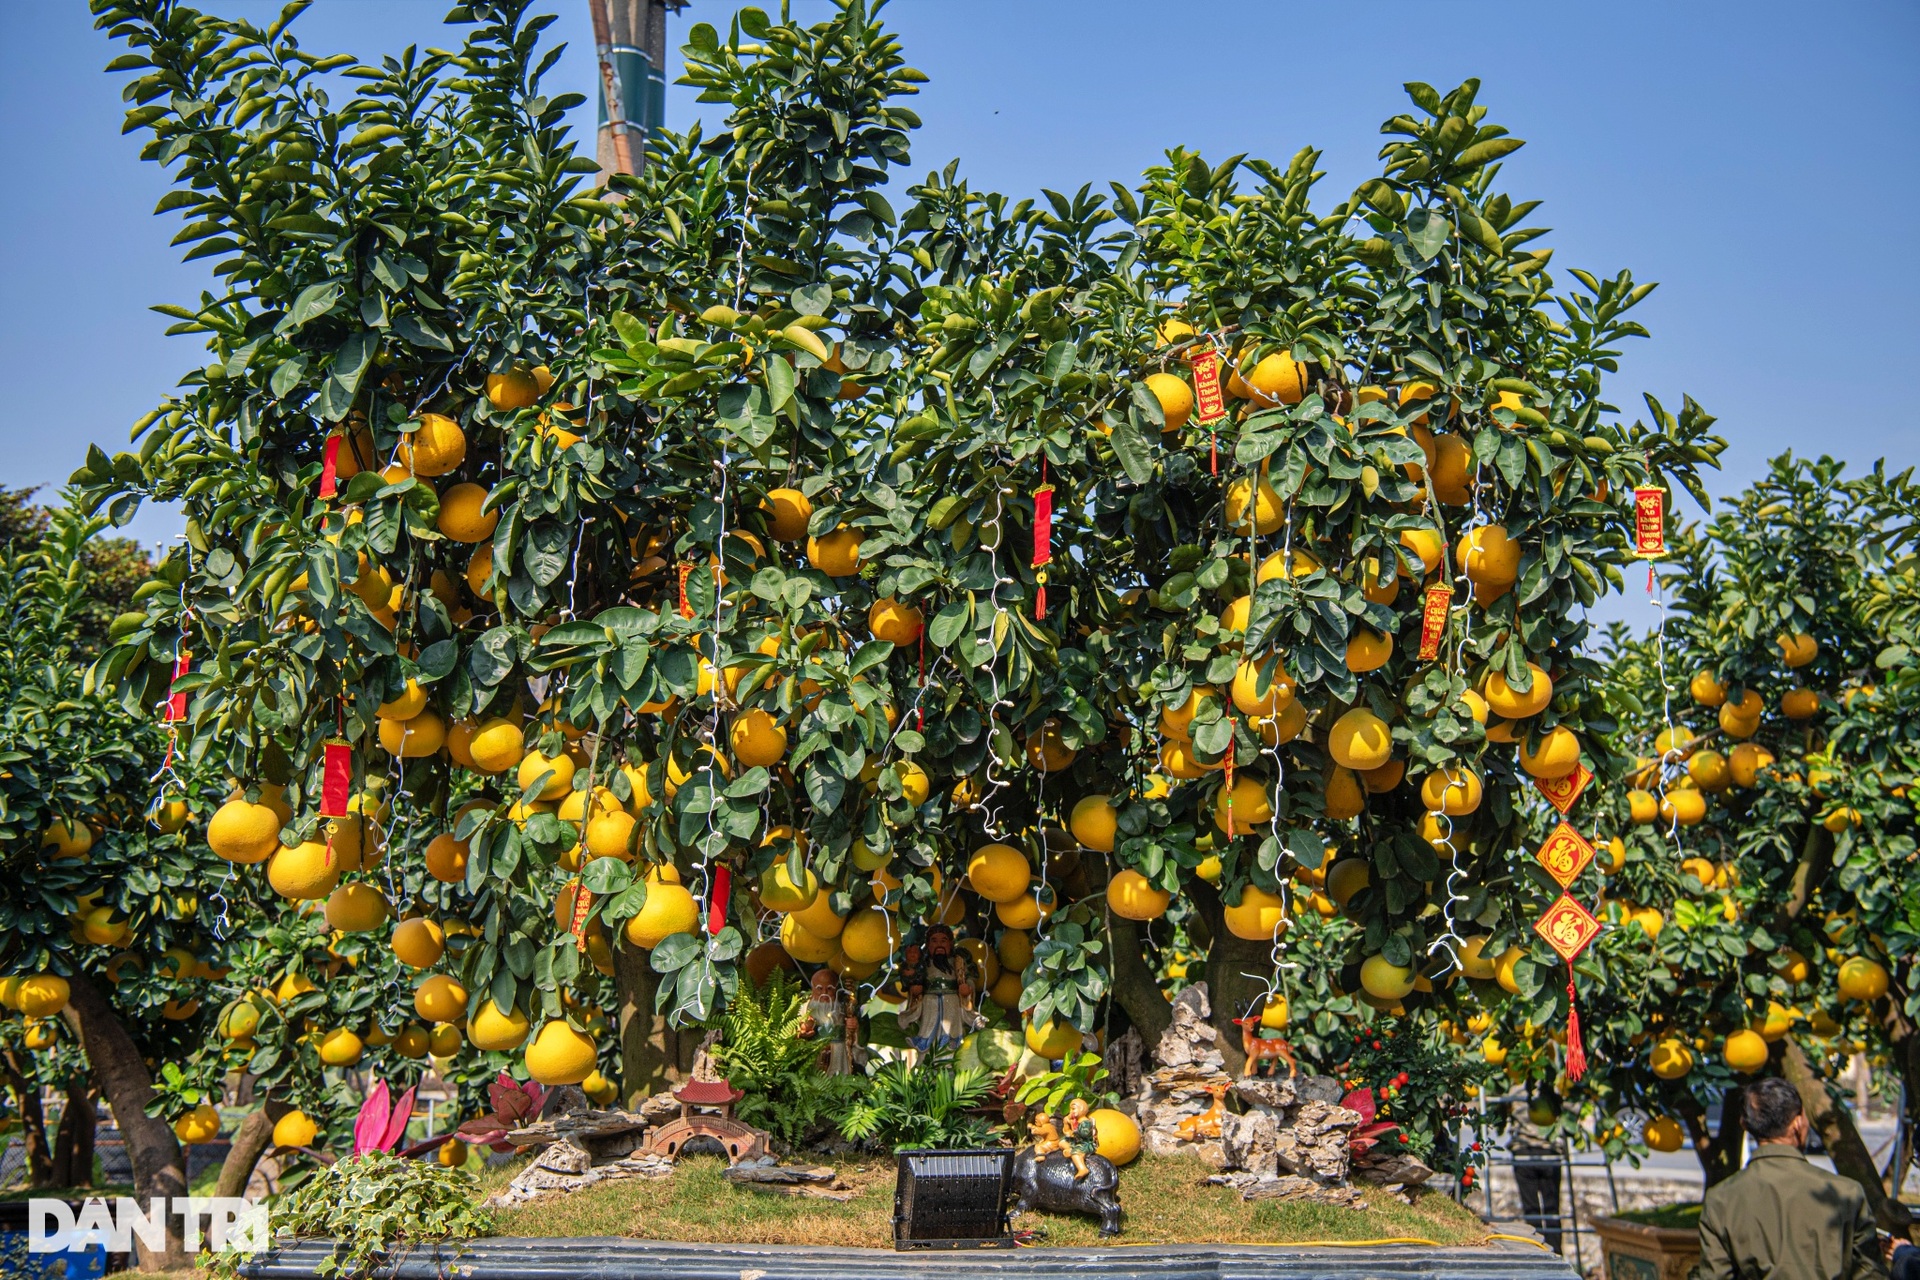 Unique 400-fruit Dien pomelo tree for sale for 200 million dong in Hanoi - 4